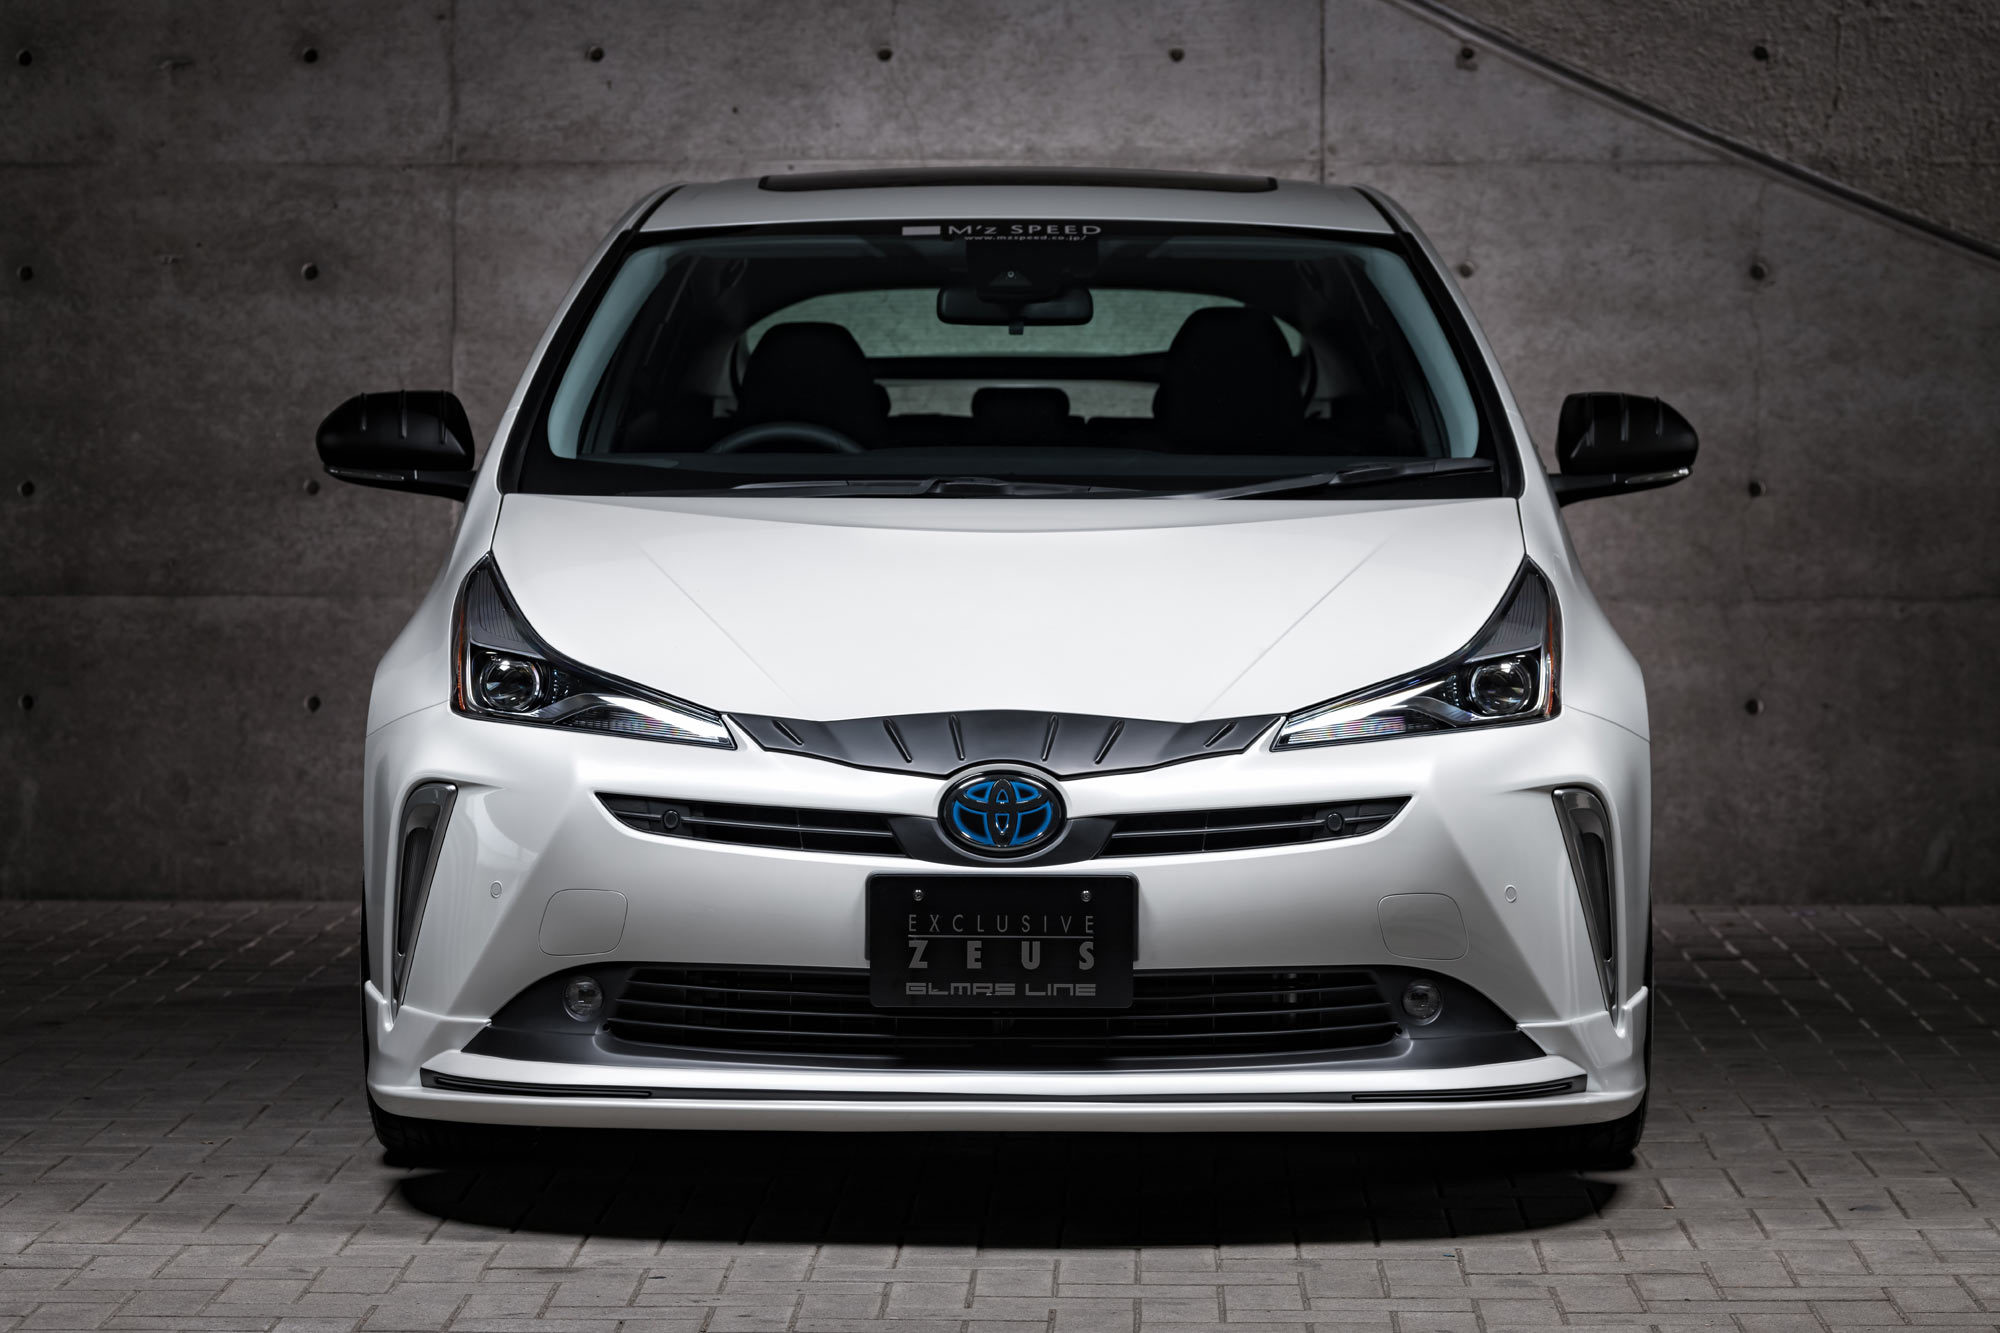 M'z Speed body kit for Toyota Prius new style